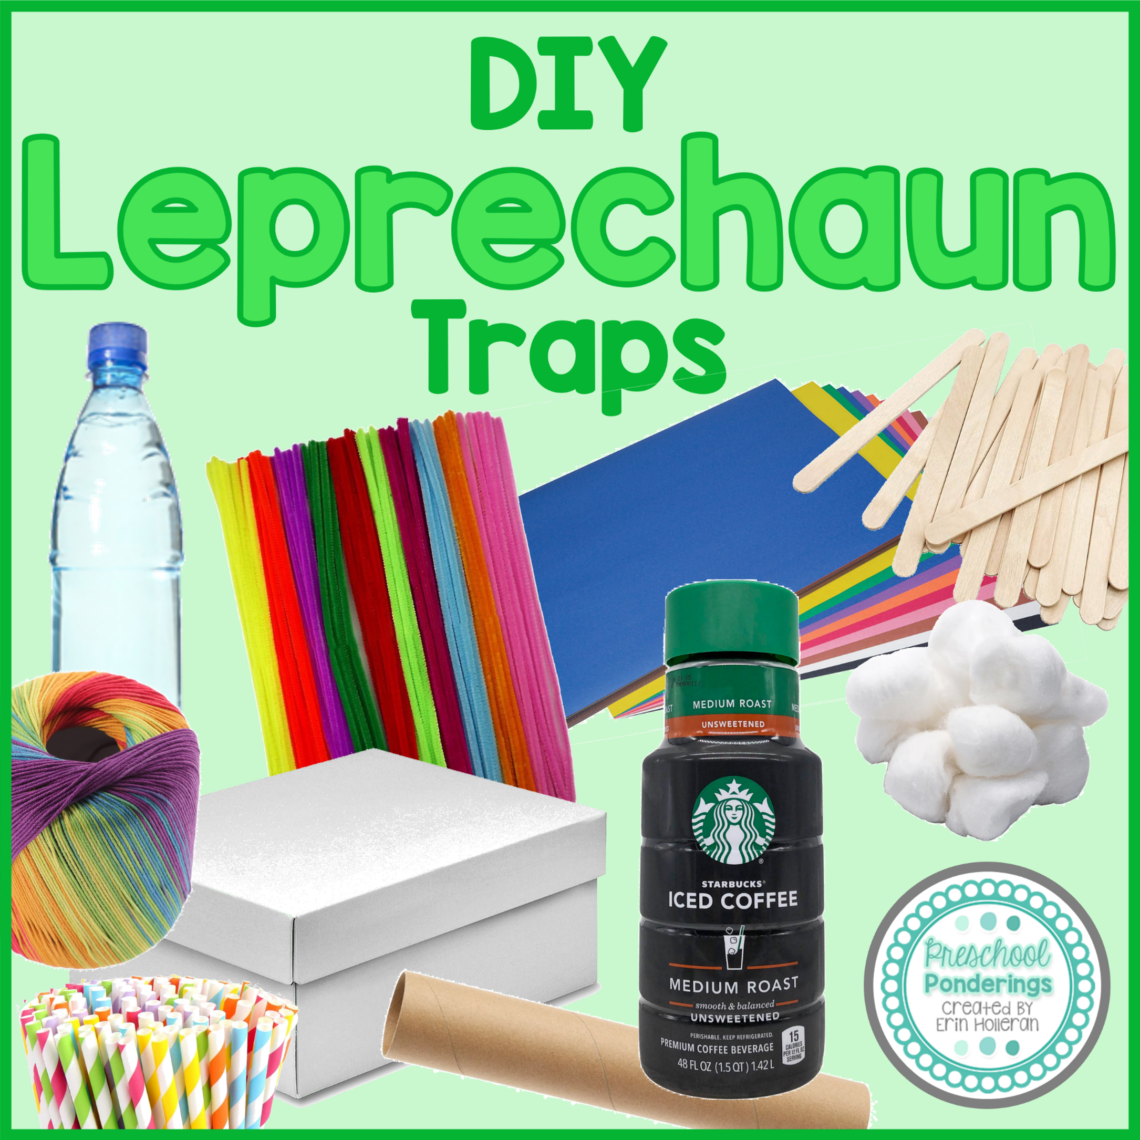 Leprechaun trap supplies